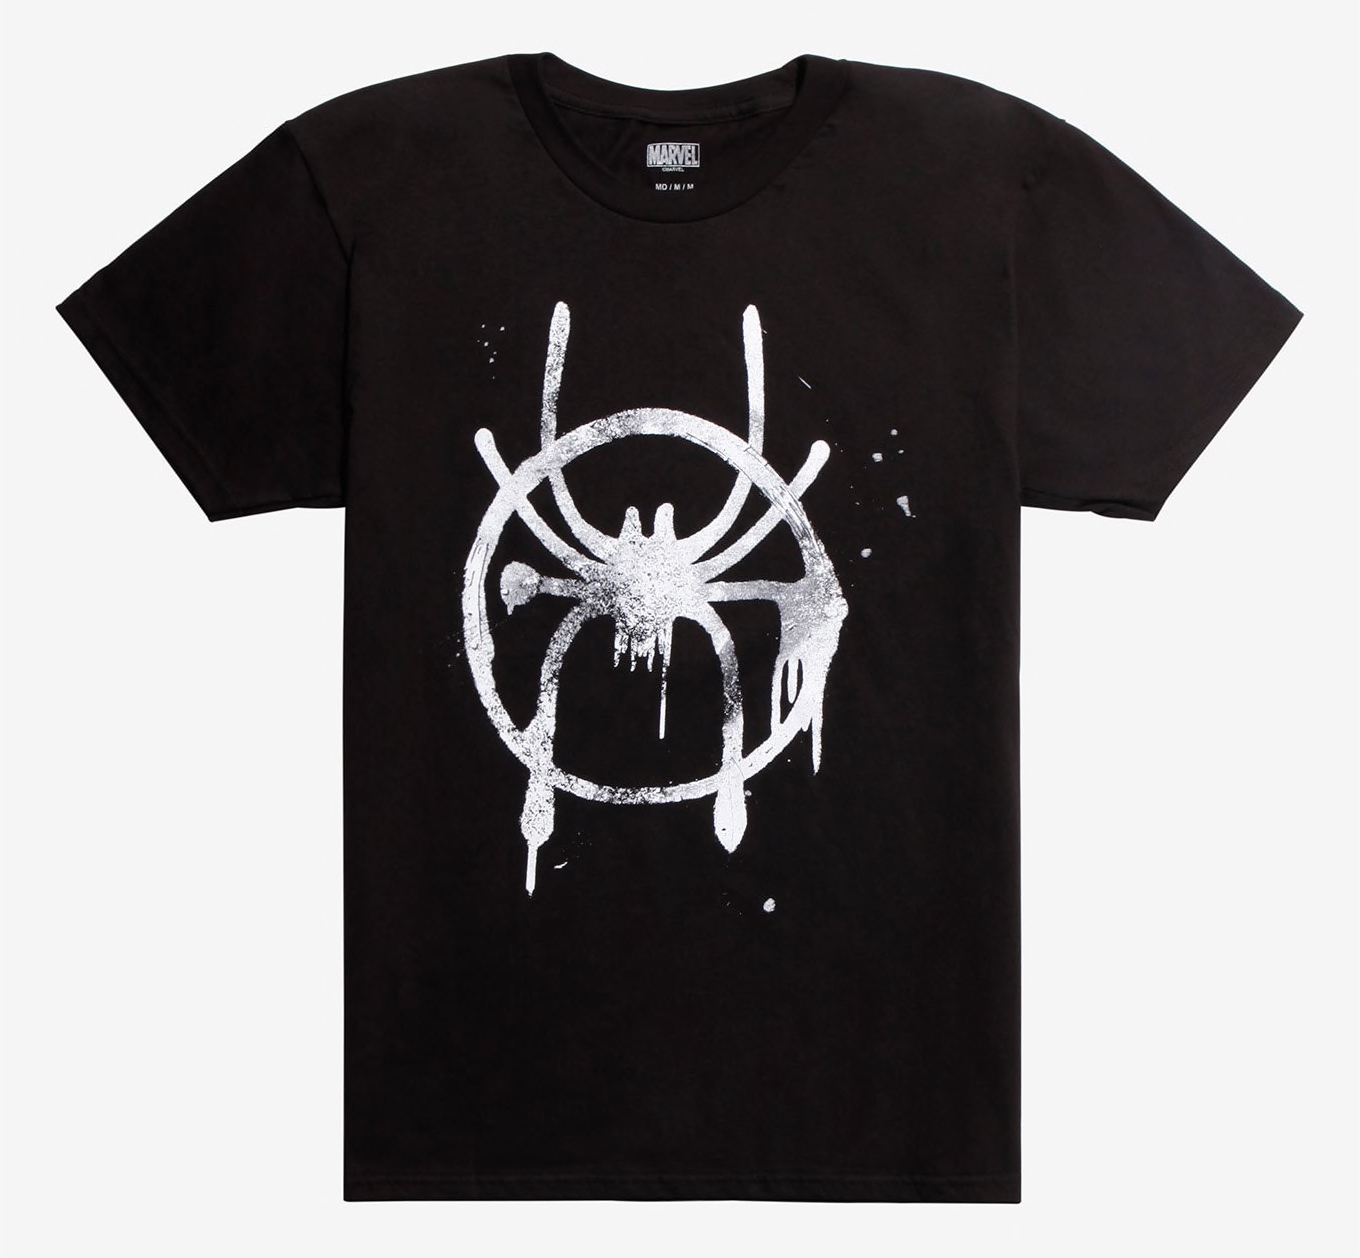 spiderman-spider-verse-shirt-match-jordan-1-origin-story-3